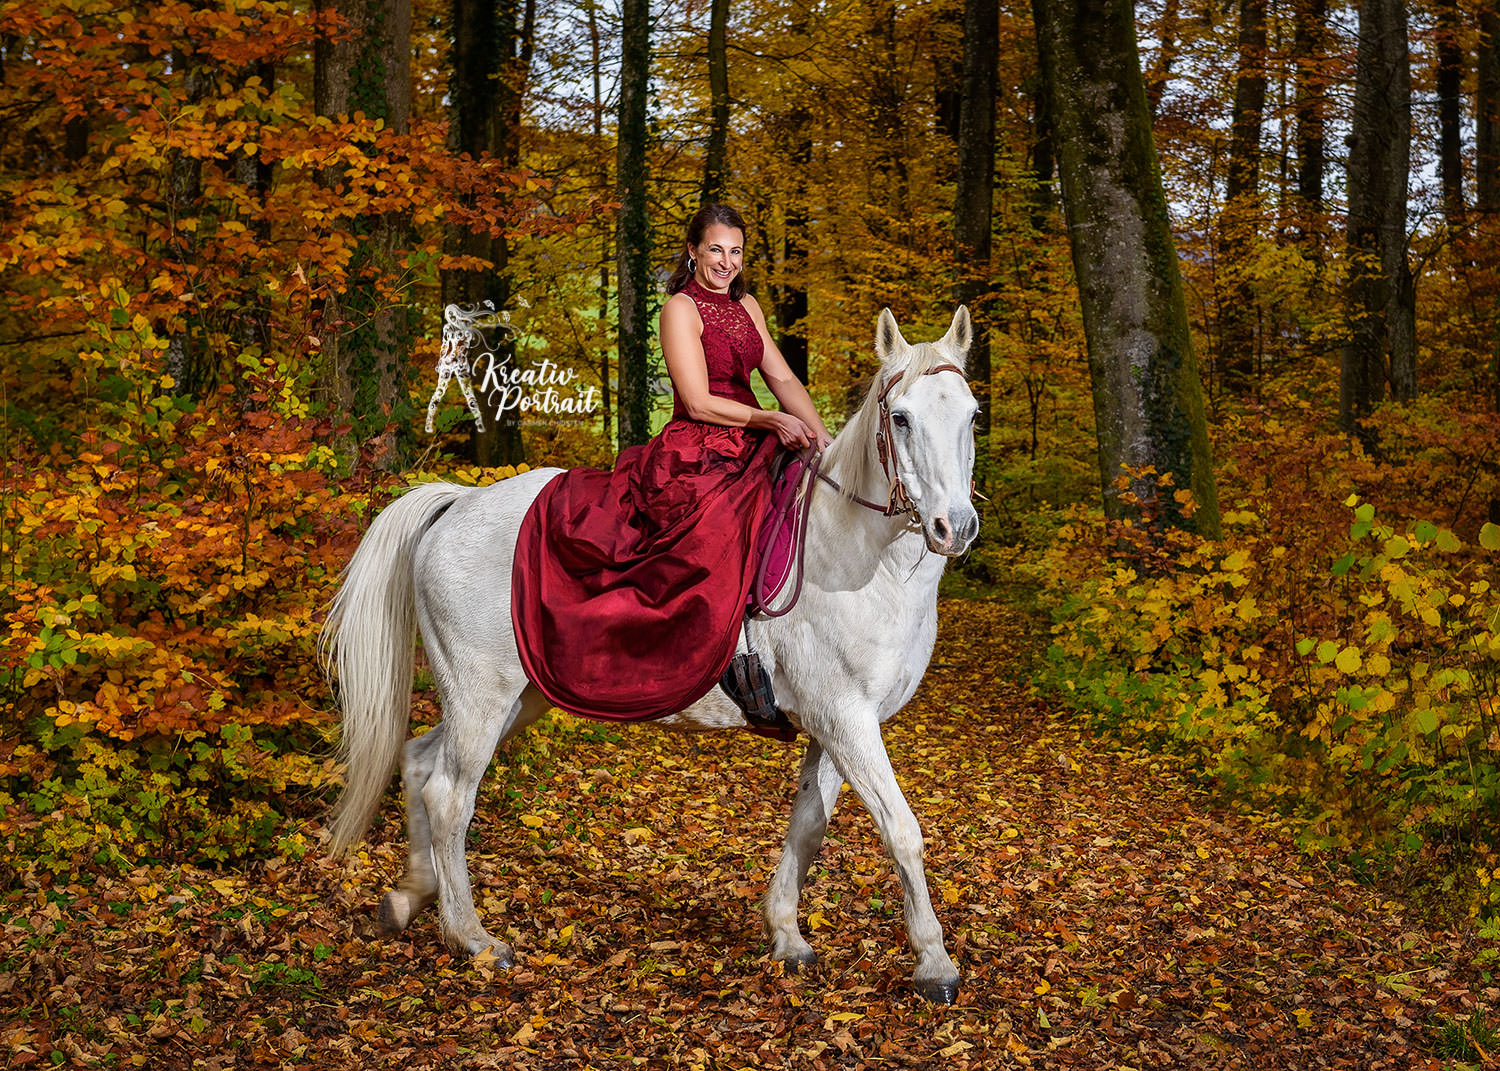 Romantisches Pferdeshooting im Herbstwald